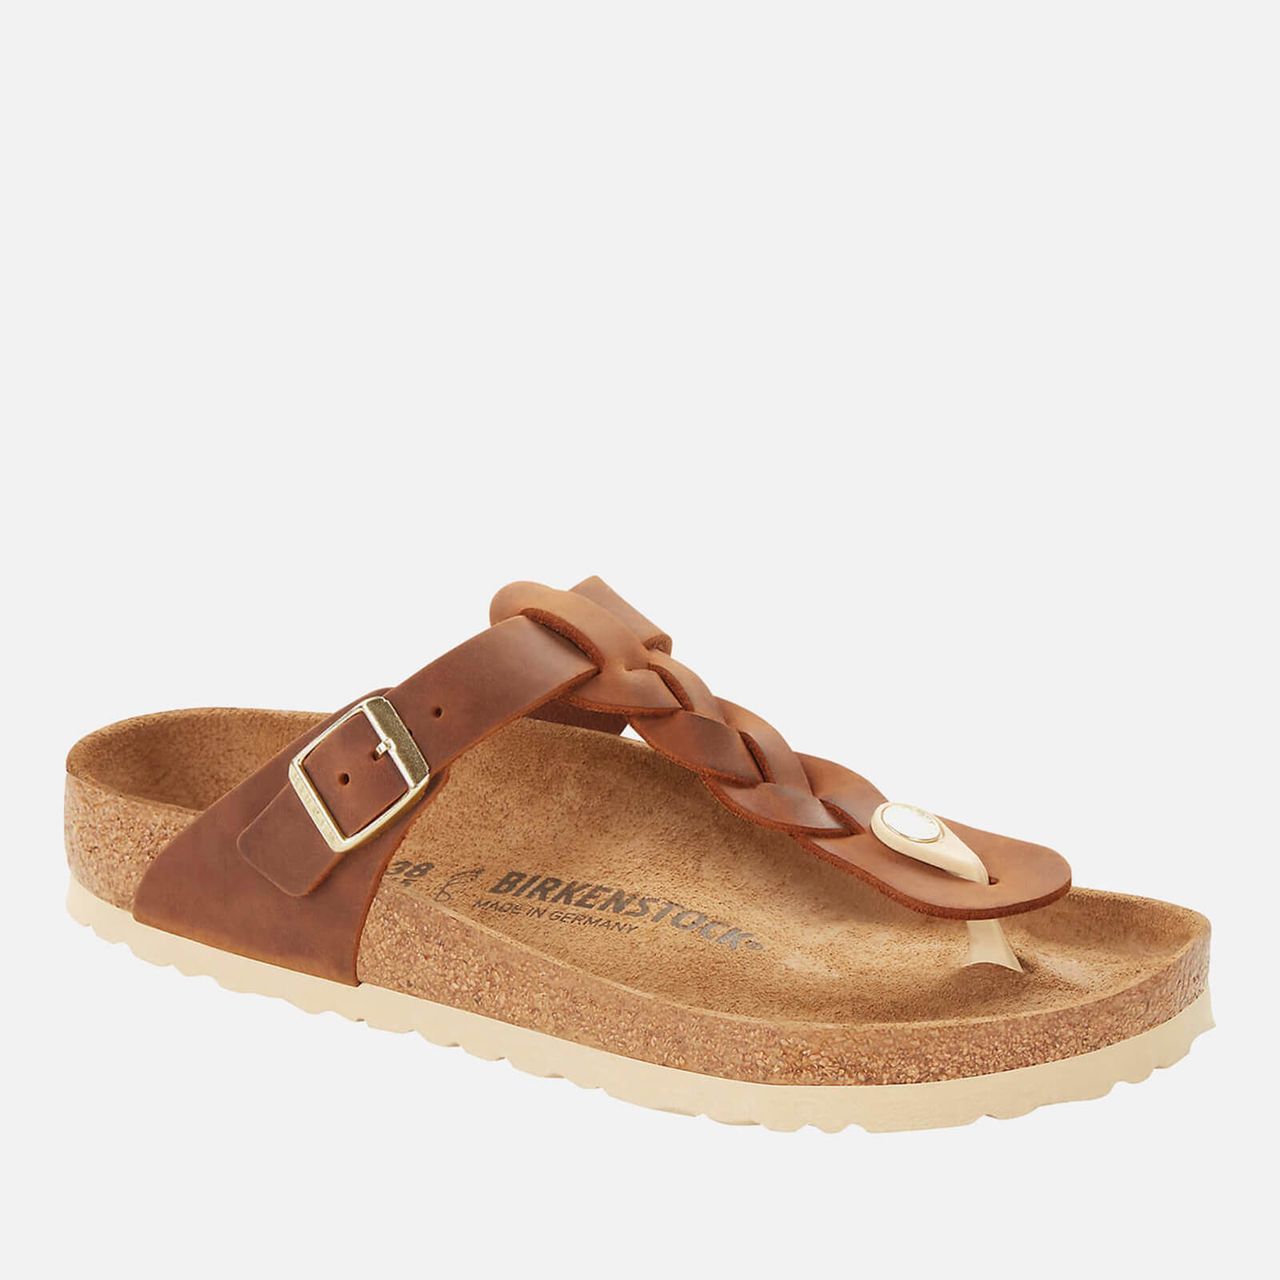 Birkenstock Gizeh Braided Leather Sandals - EU 39/UK 9